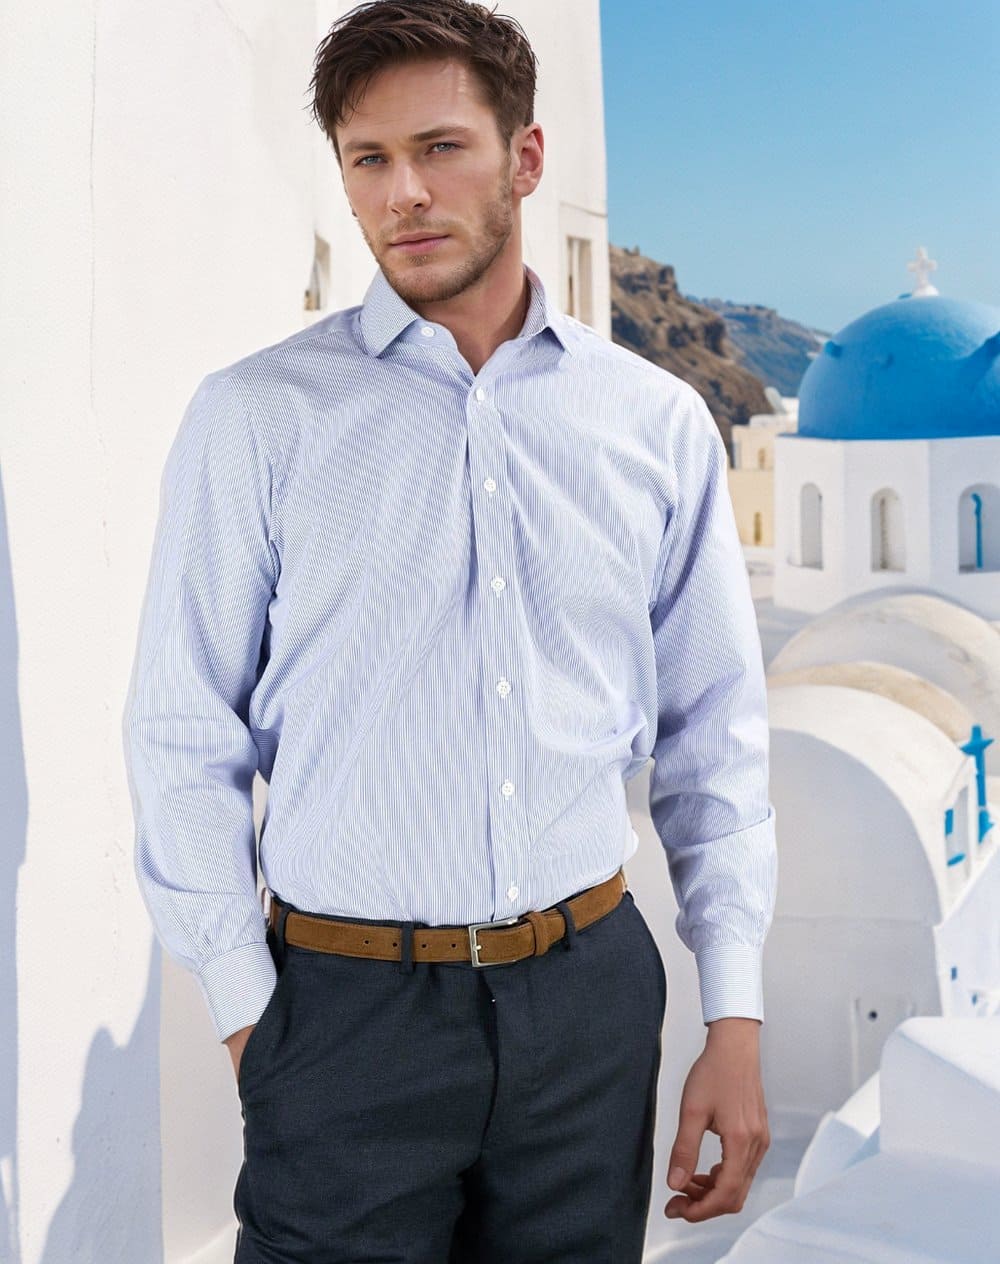 Classic Fit, Cut-away Collar, Double Cuff Shirt in a Blue & White Fine Bengal Poplin Cotton